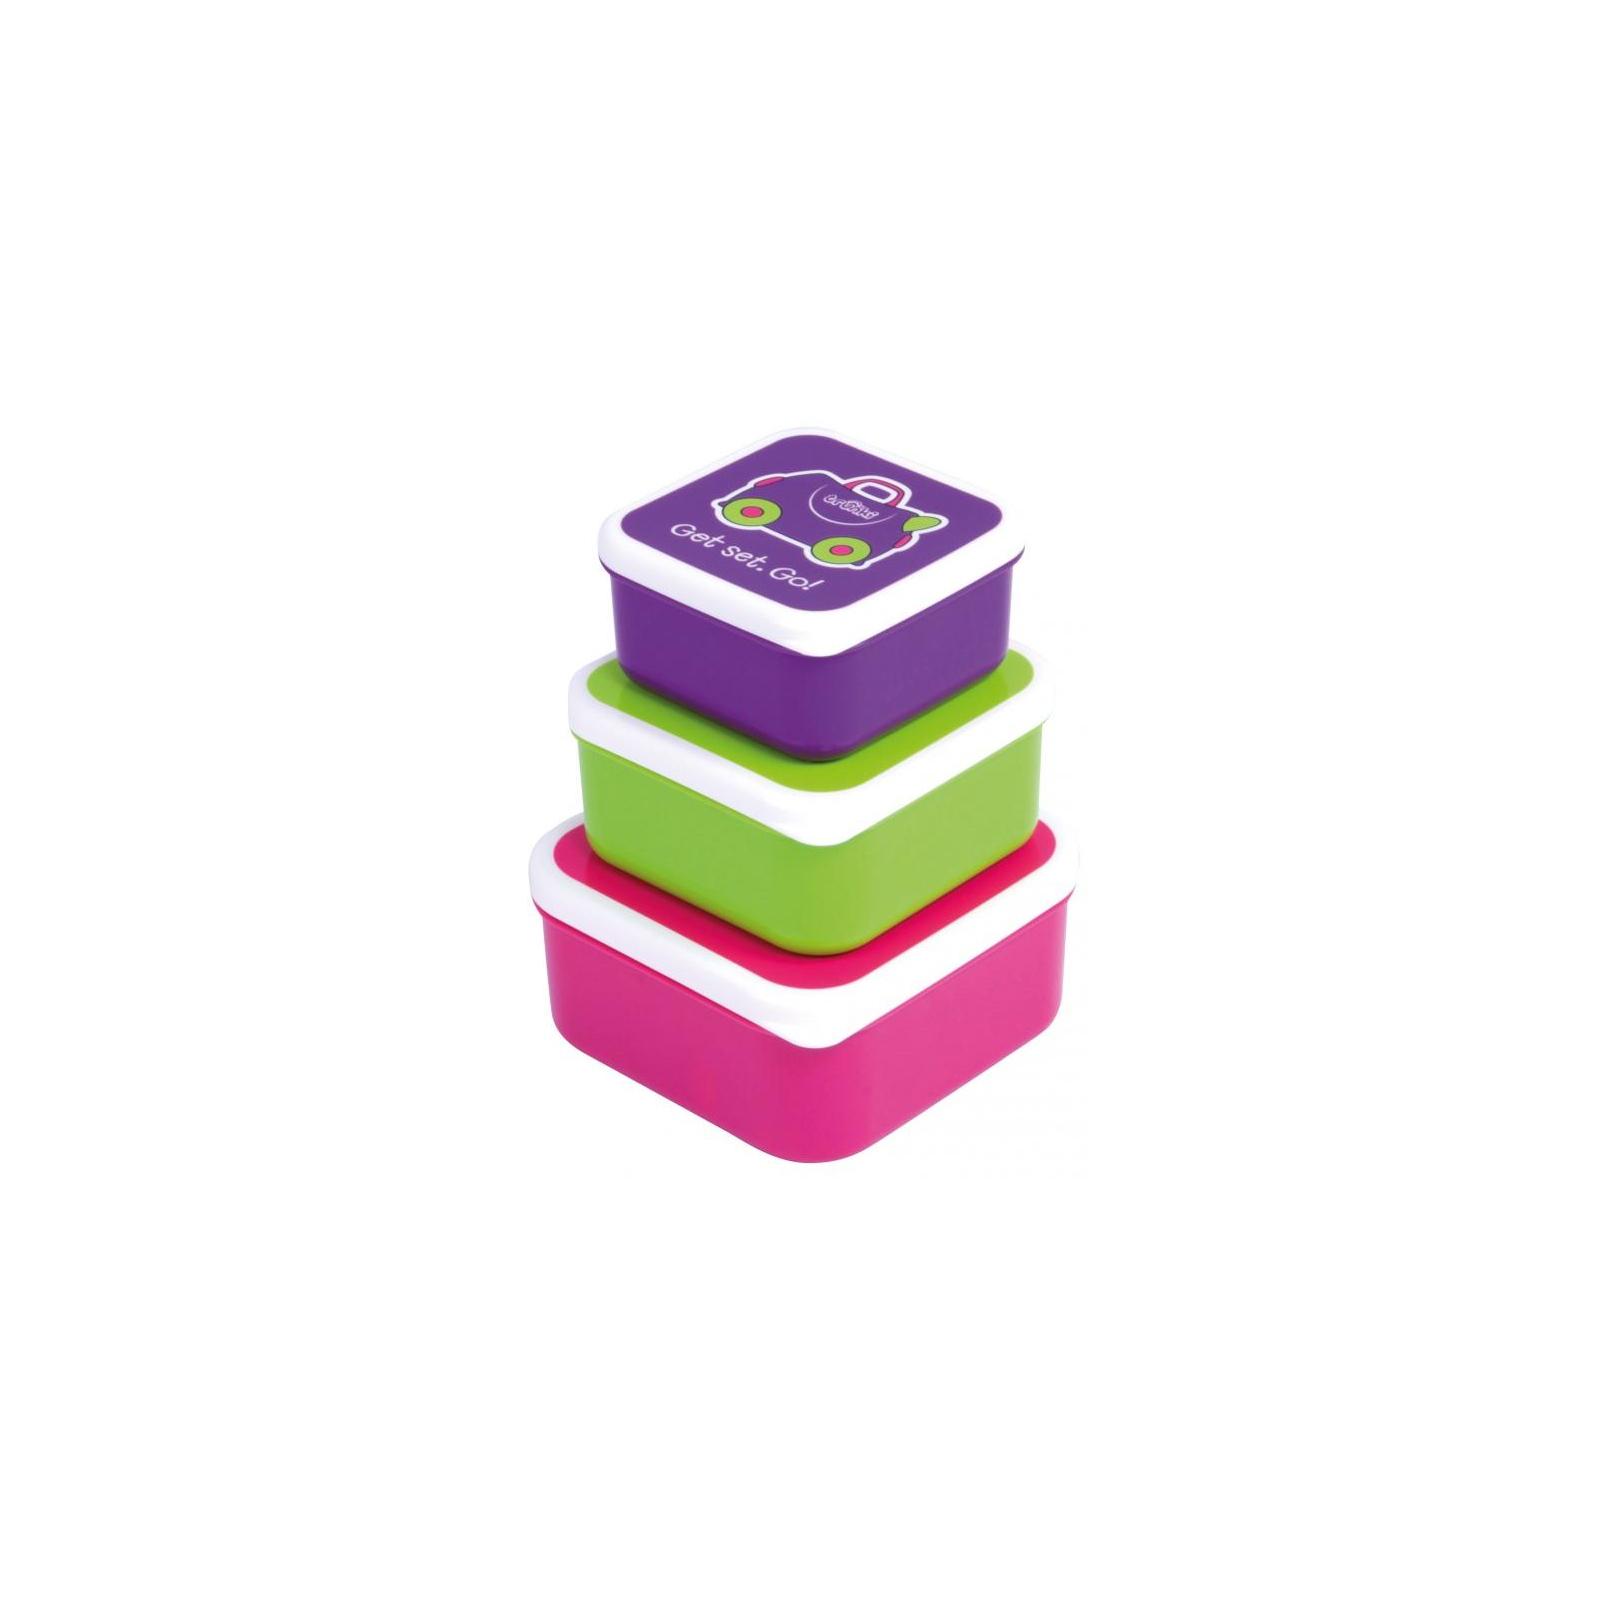 Контейнер для зберігання продуктів Trunki Набор (малиновый, салатовый, фиолетовый) (0300-GB01)